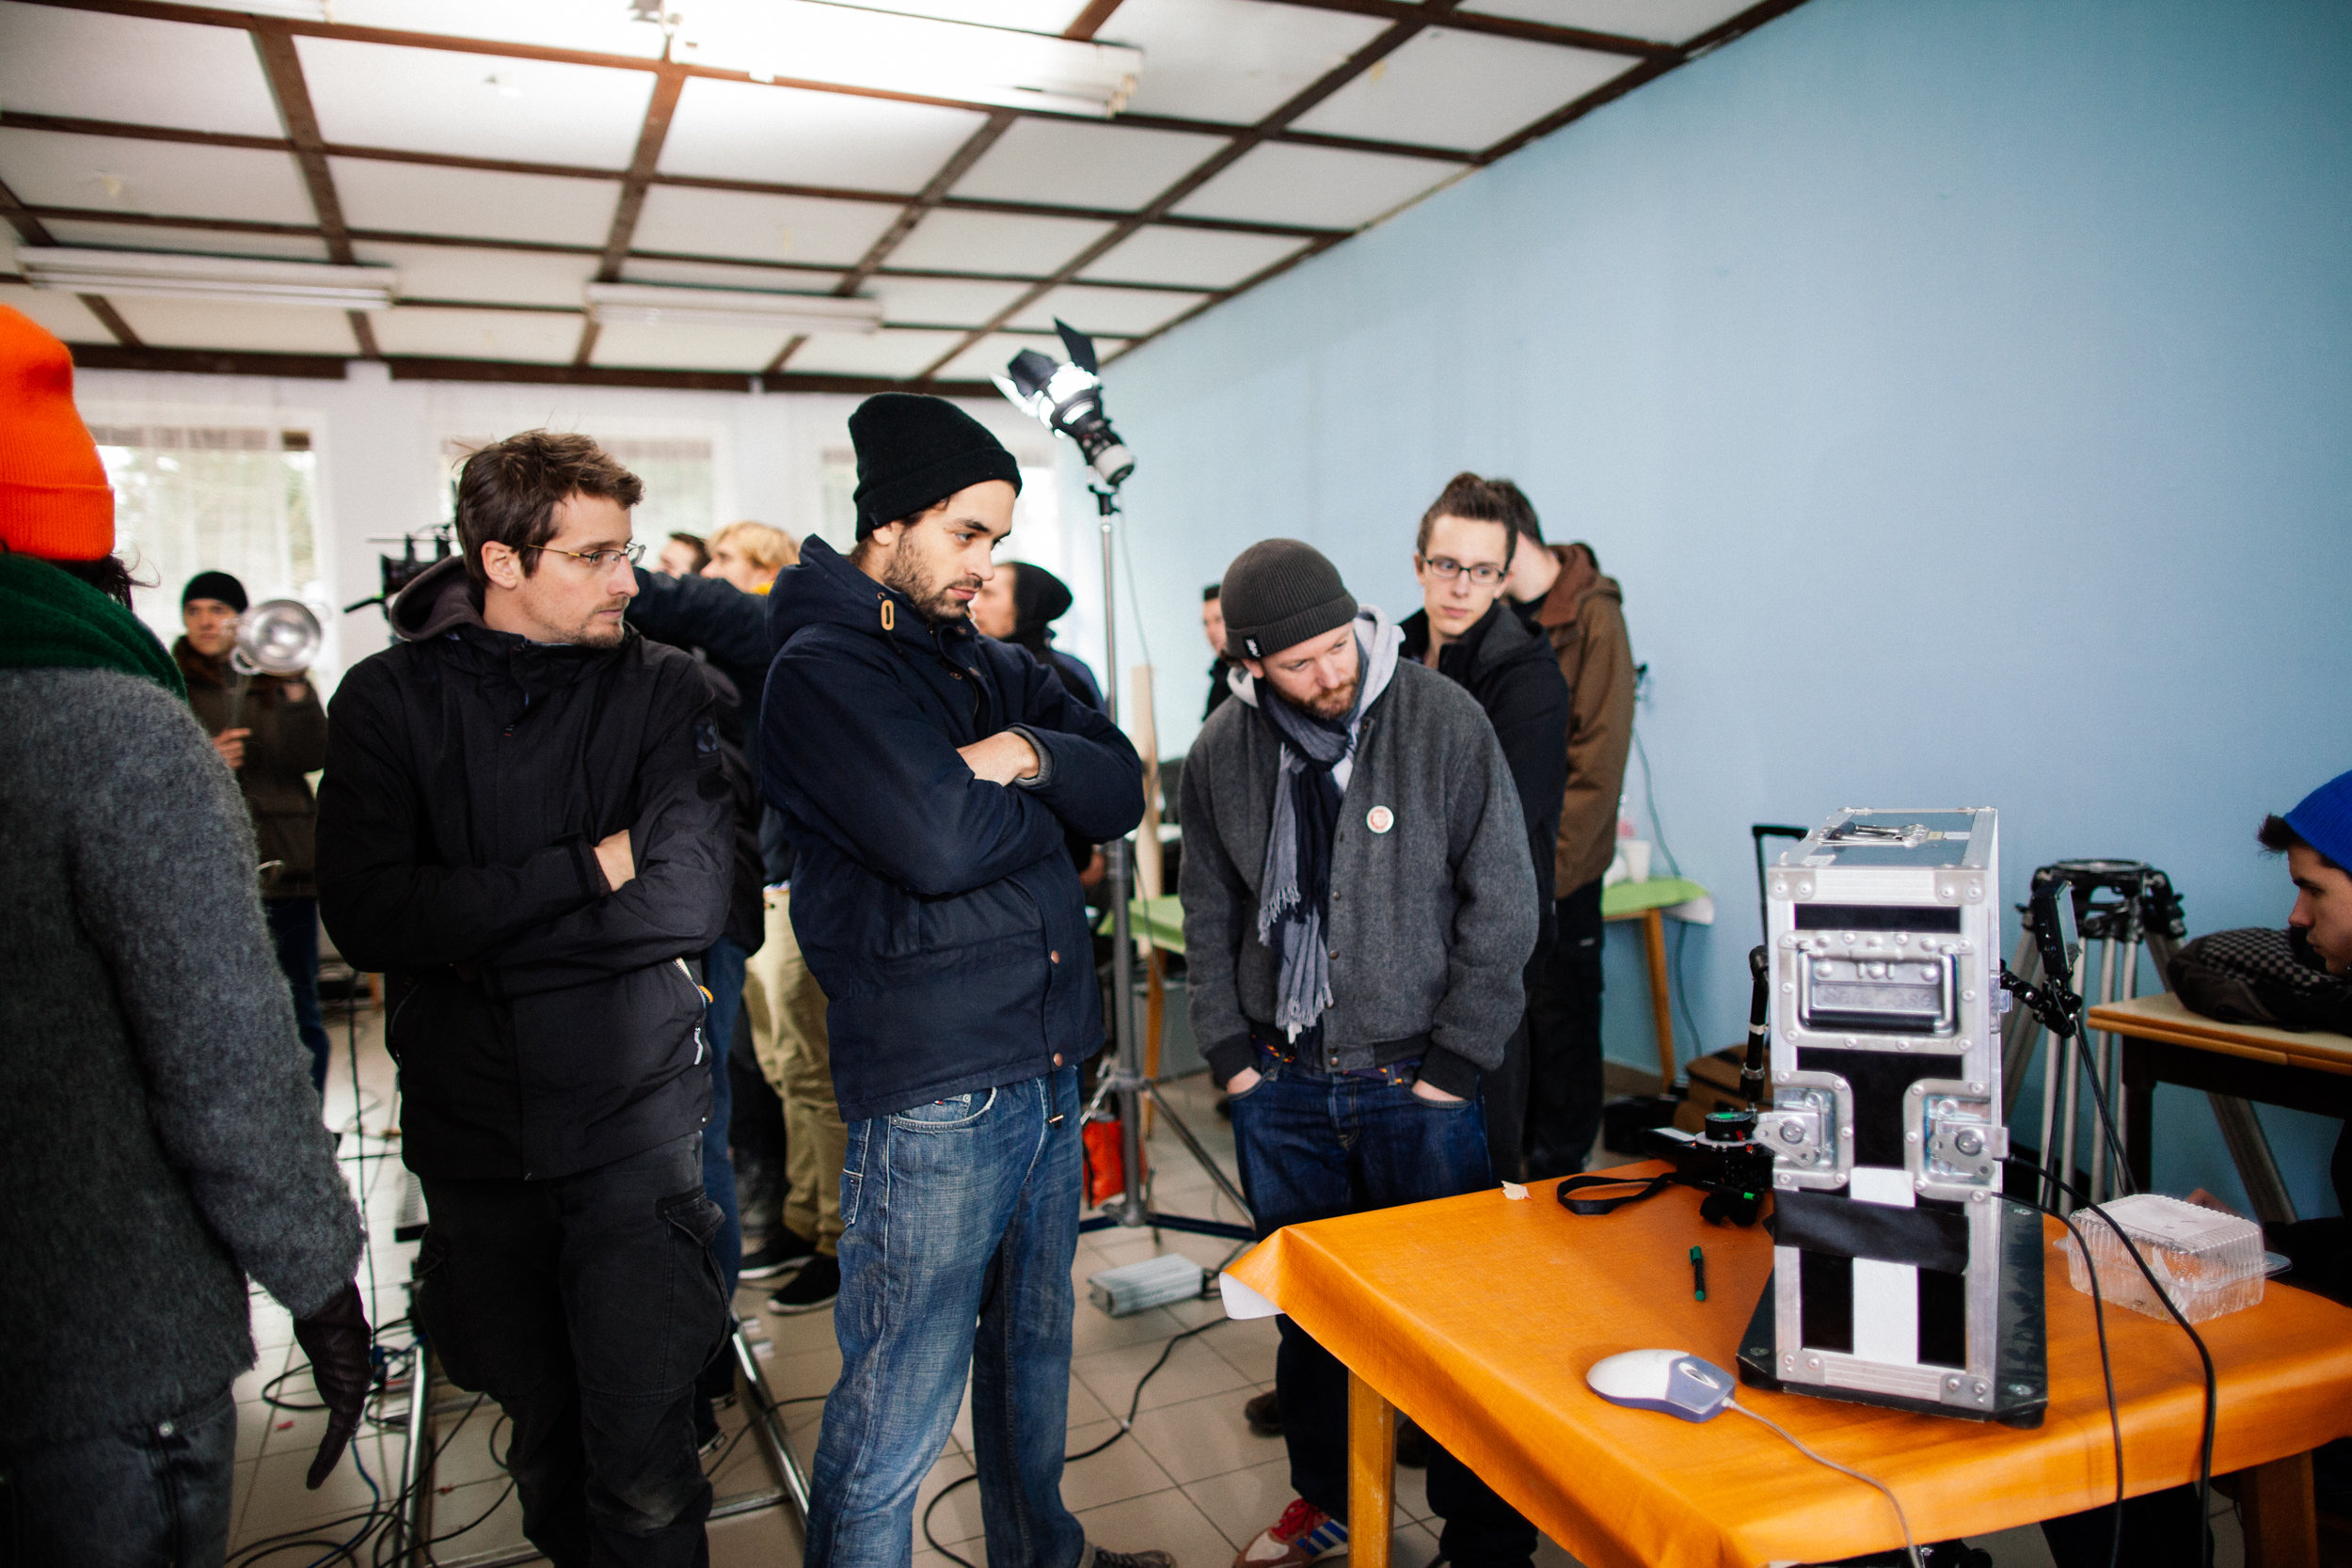 Péter Böszörményi (first assistant camera), Bálint Szimler (director) and Marcell Rév (cinematographer) on the set of Balaton Method.